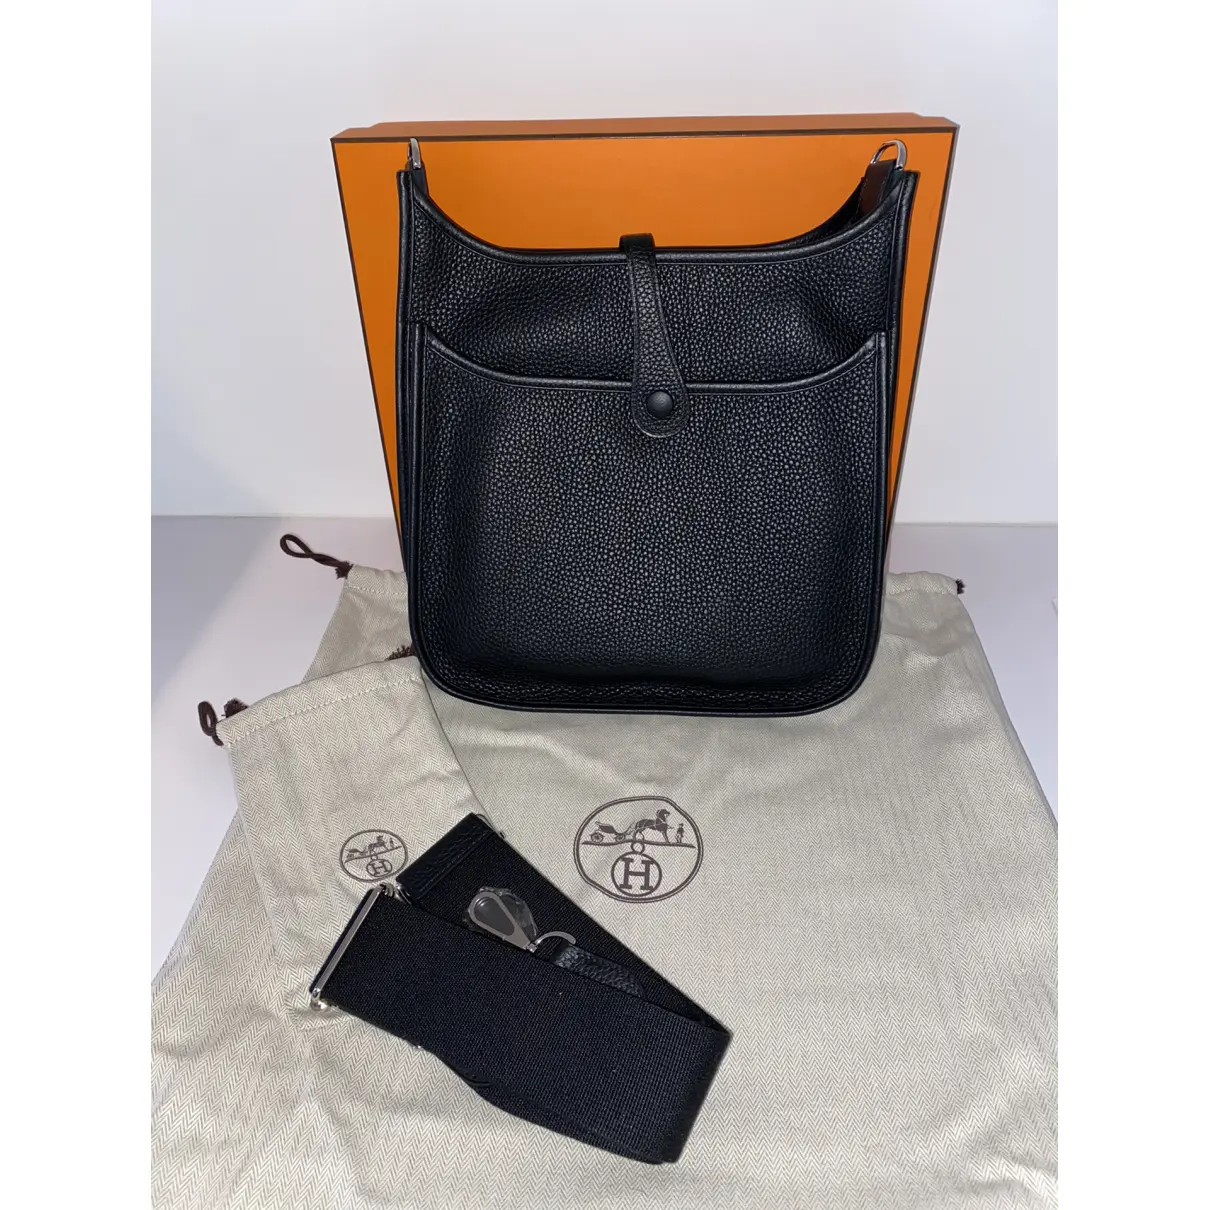 Buy Hermès Evelyne Sellier leather crossbody bag online